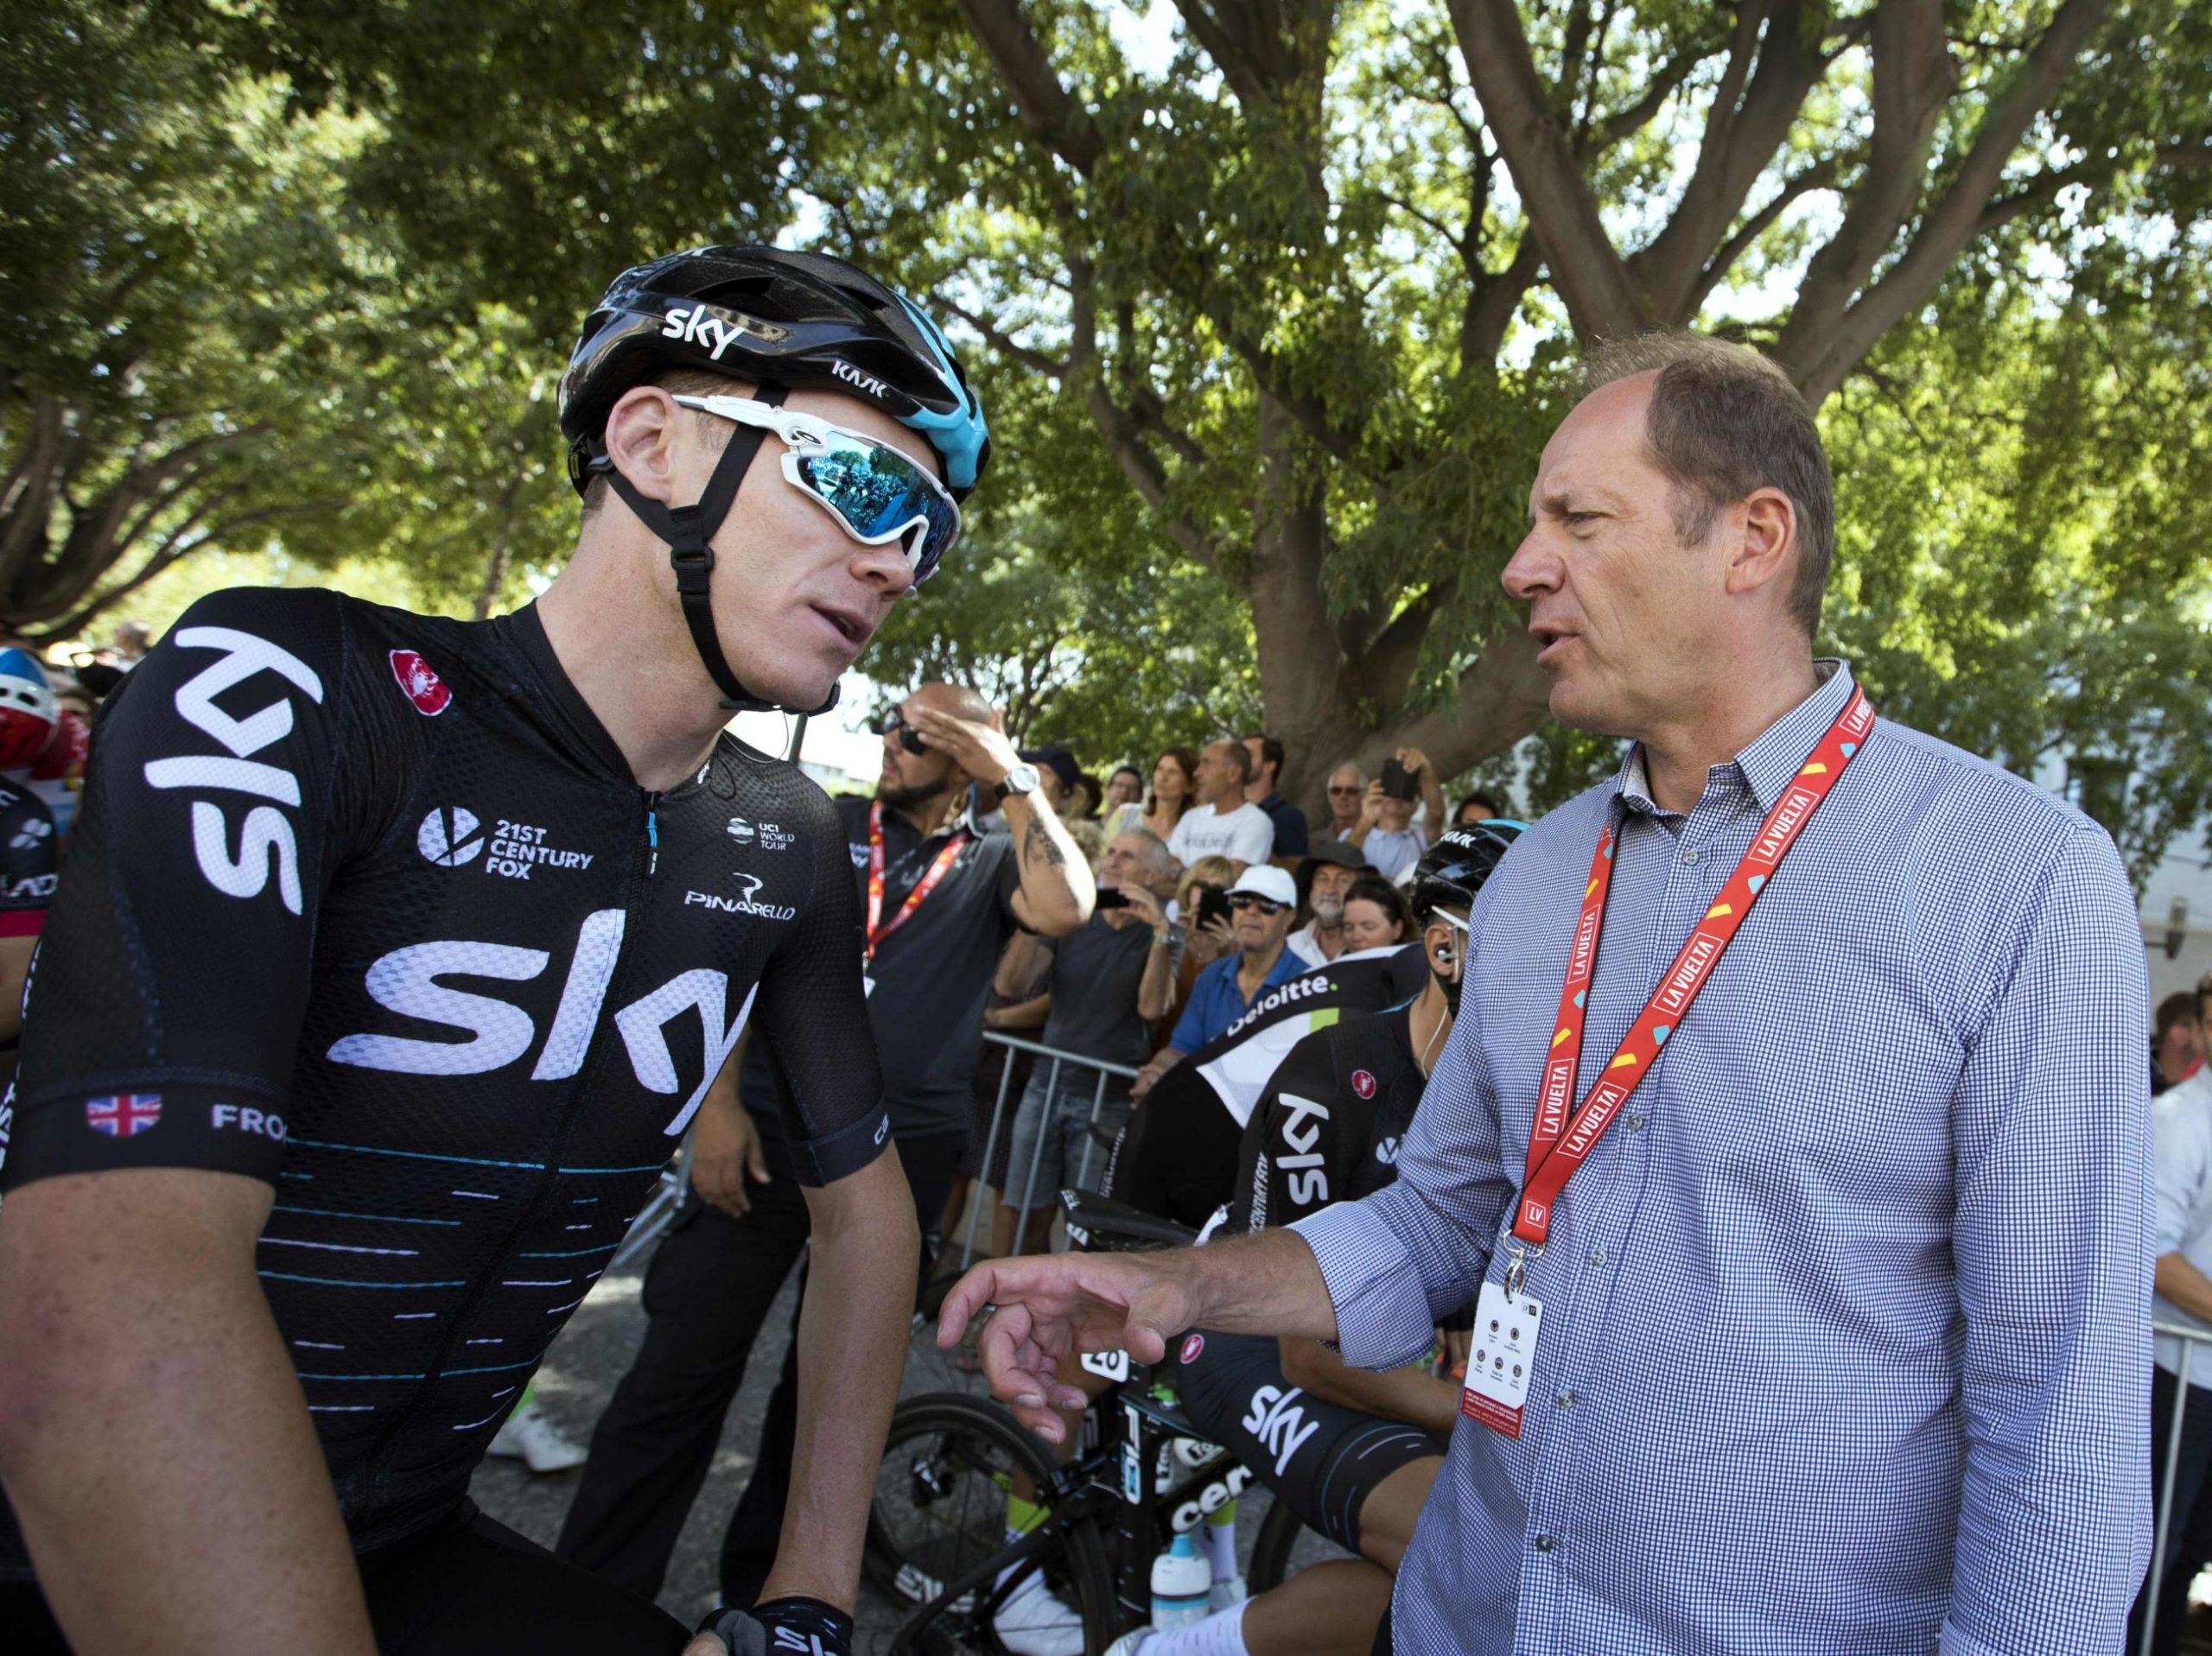 Tour de France-sjefen virussmittet: – Den verste som kunne testet positivt